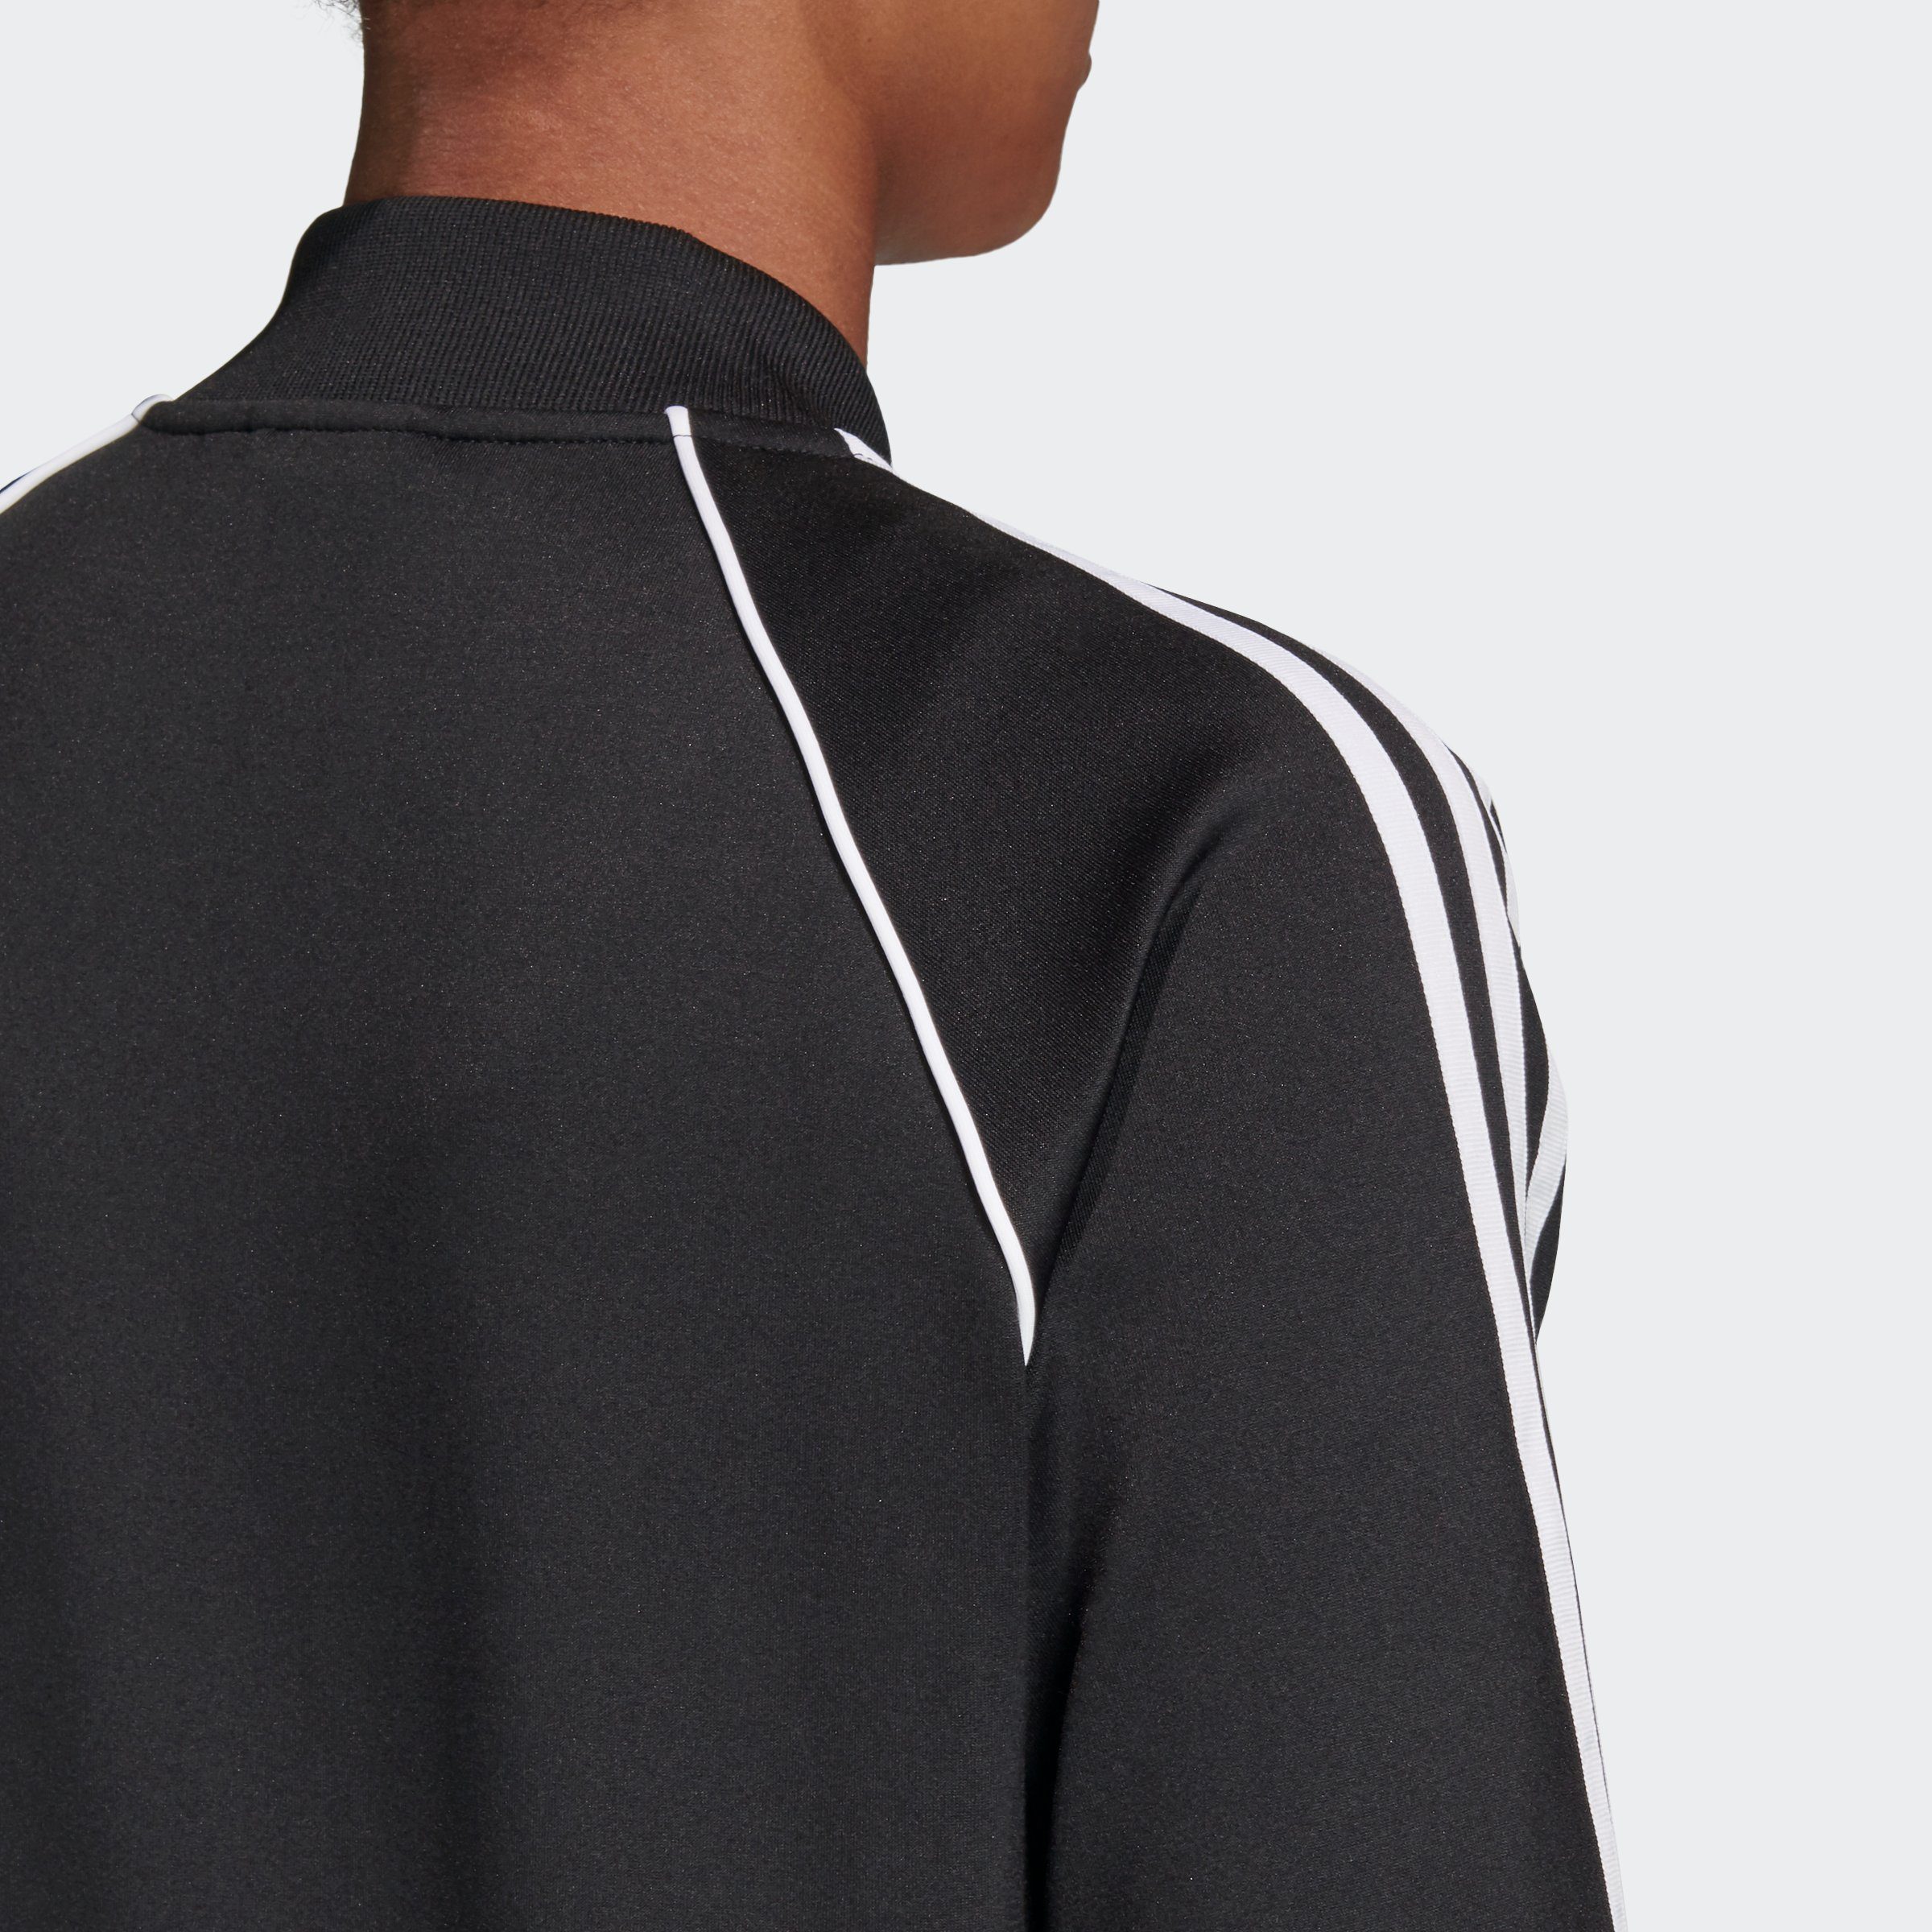 adidas ORIGINALS SST Originals Trainingsjacke BLACK/WHITE